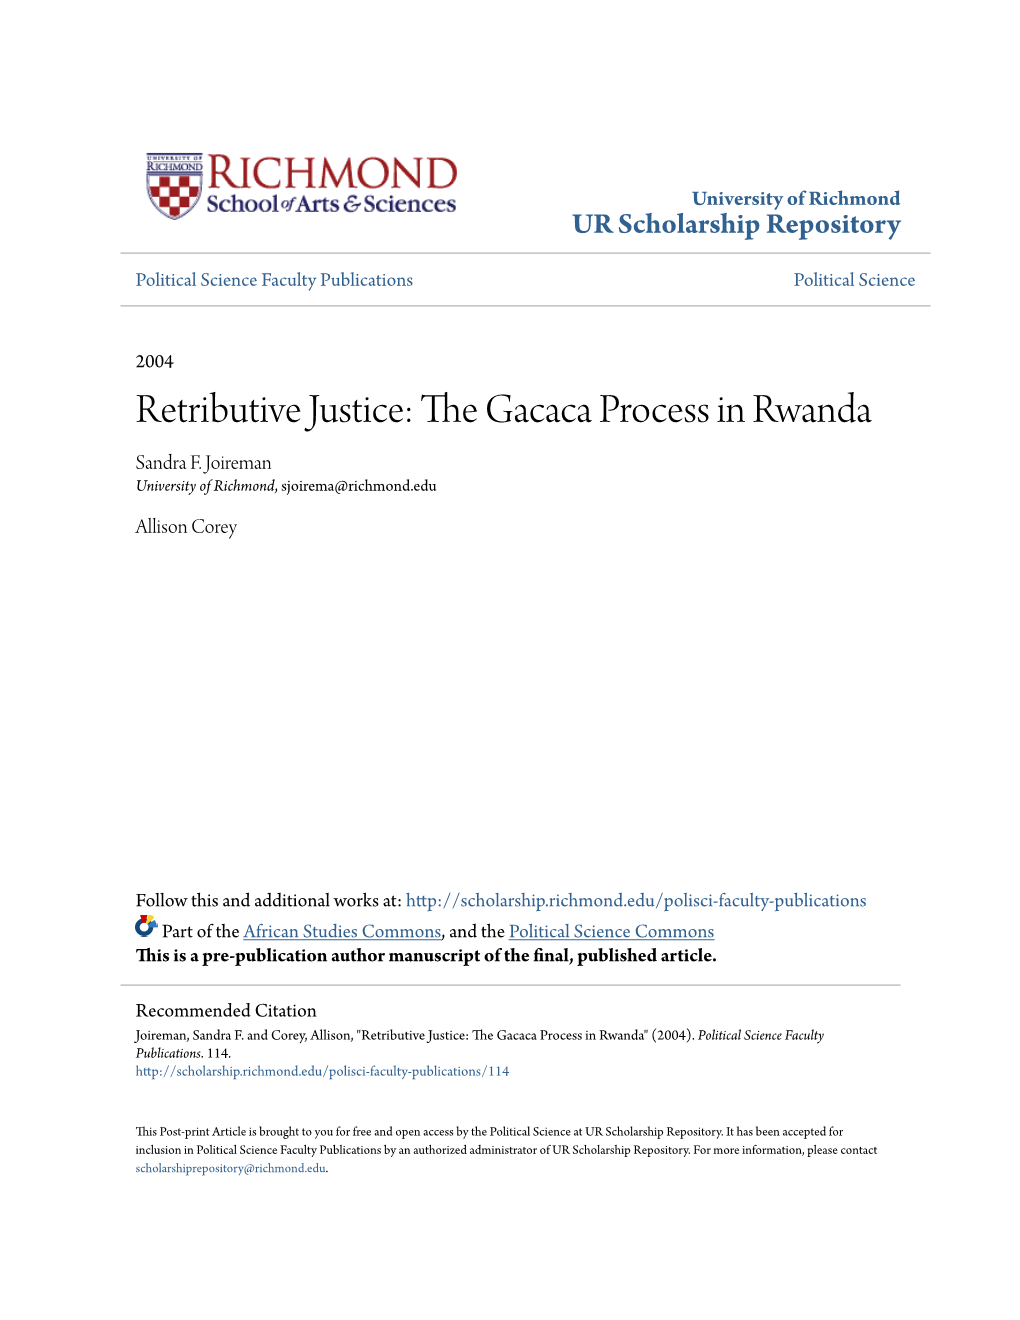 Retributive Justice: the Ag Caca Process in Rwanda Sandra F